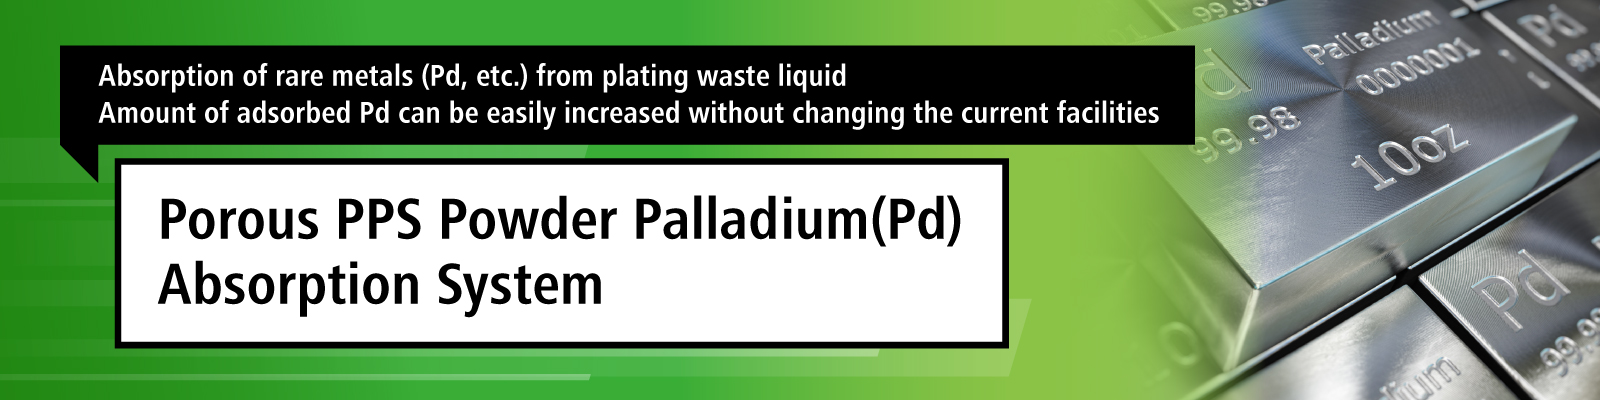 Porous PPS Powder Palladium(Pd) Absorption System